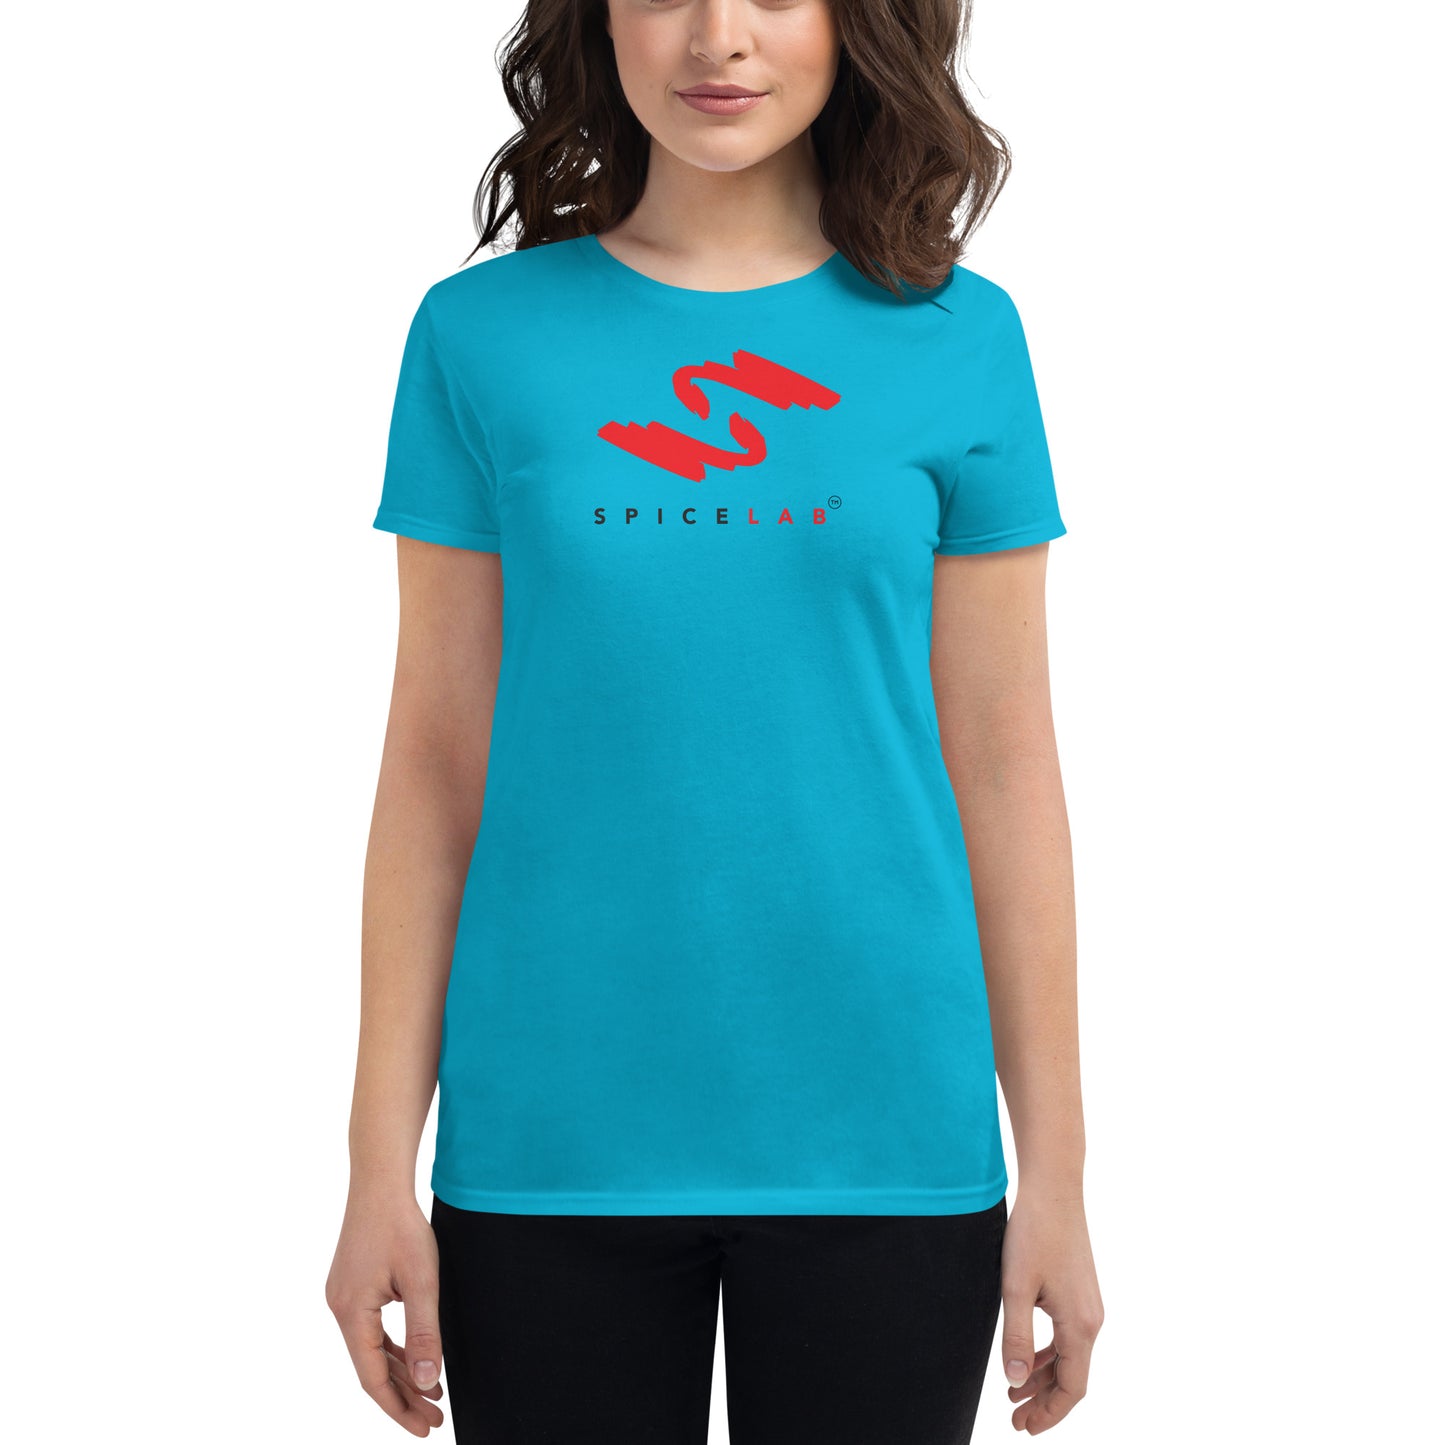 Spice Lab Trademark Women's short sleeve t-shirt